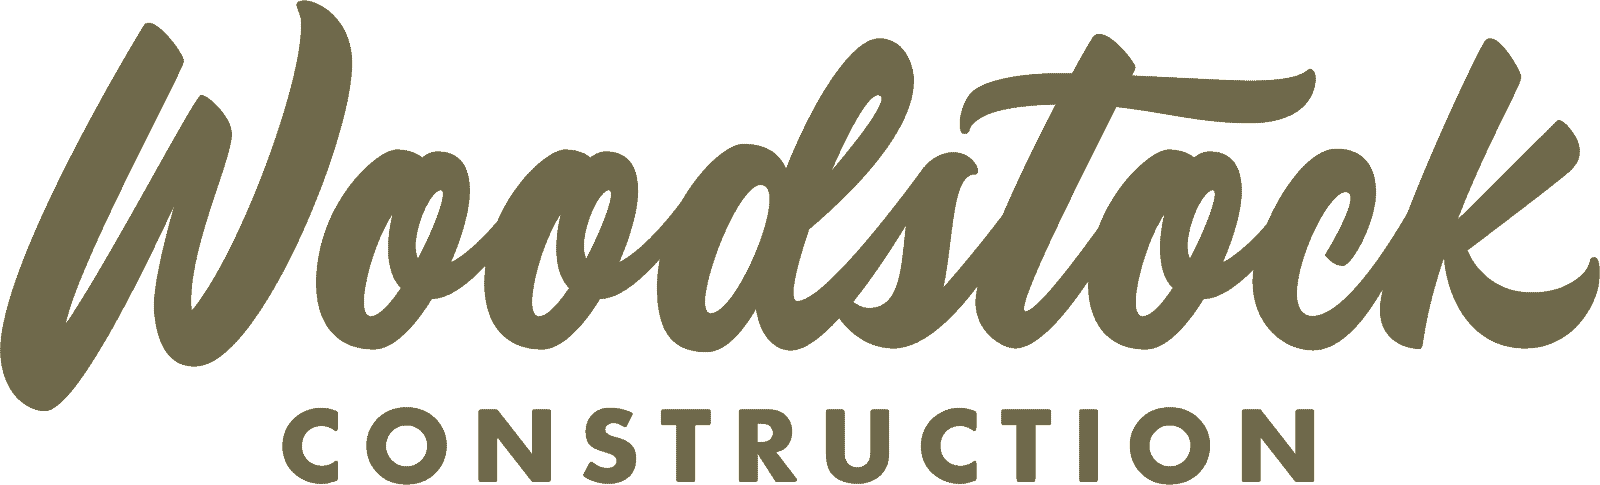 Woodstock-Construction-Logo